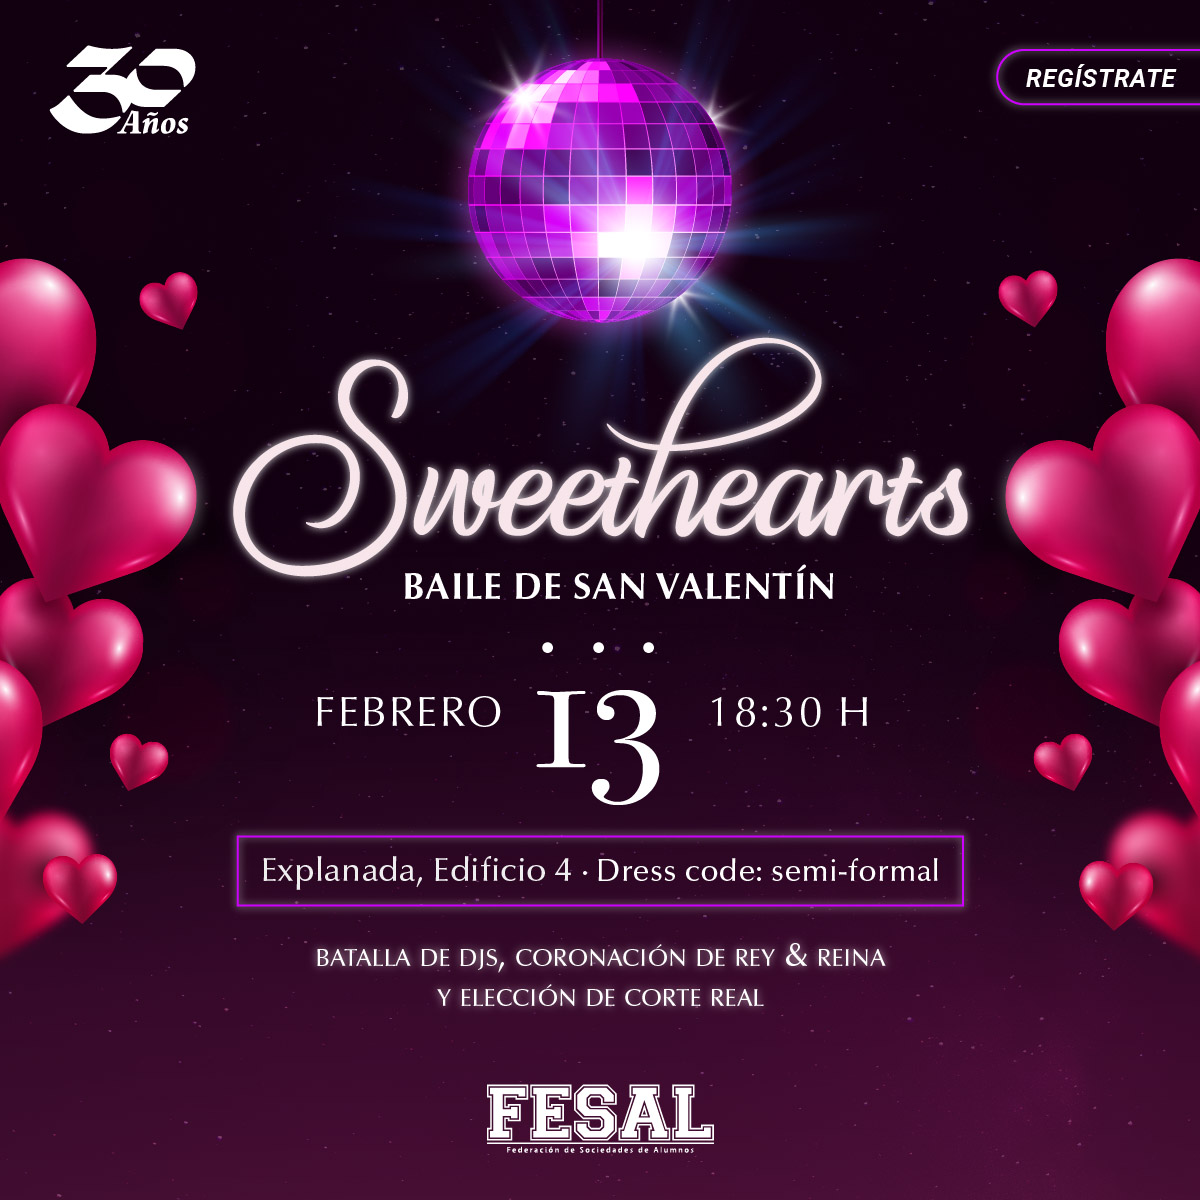 Sweethearts: Baile de San Valentín